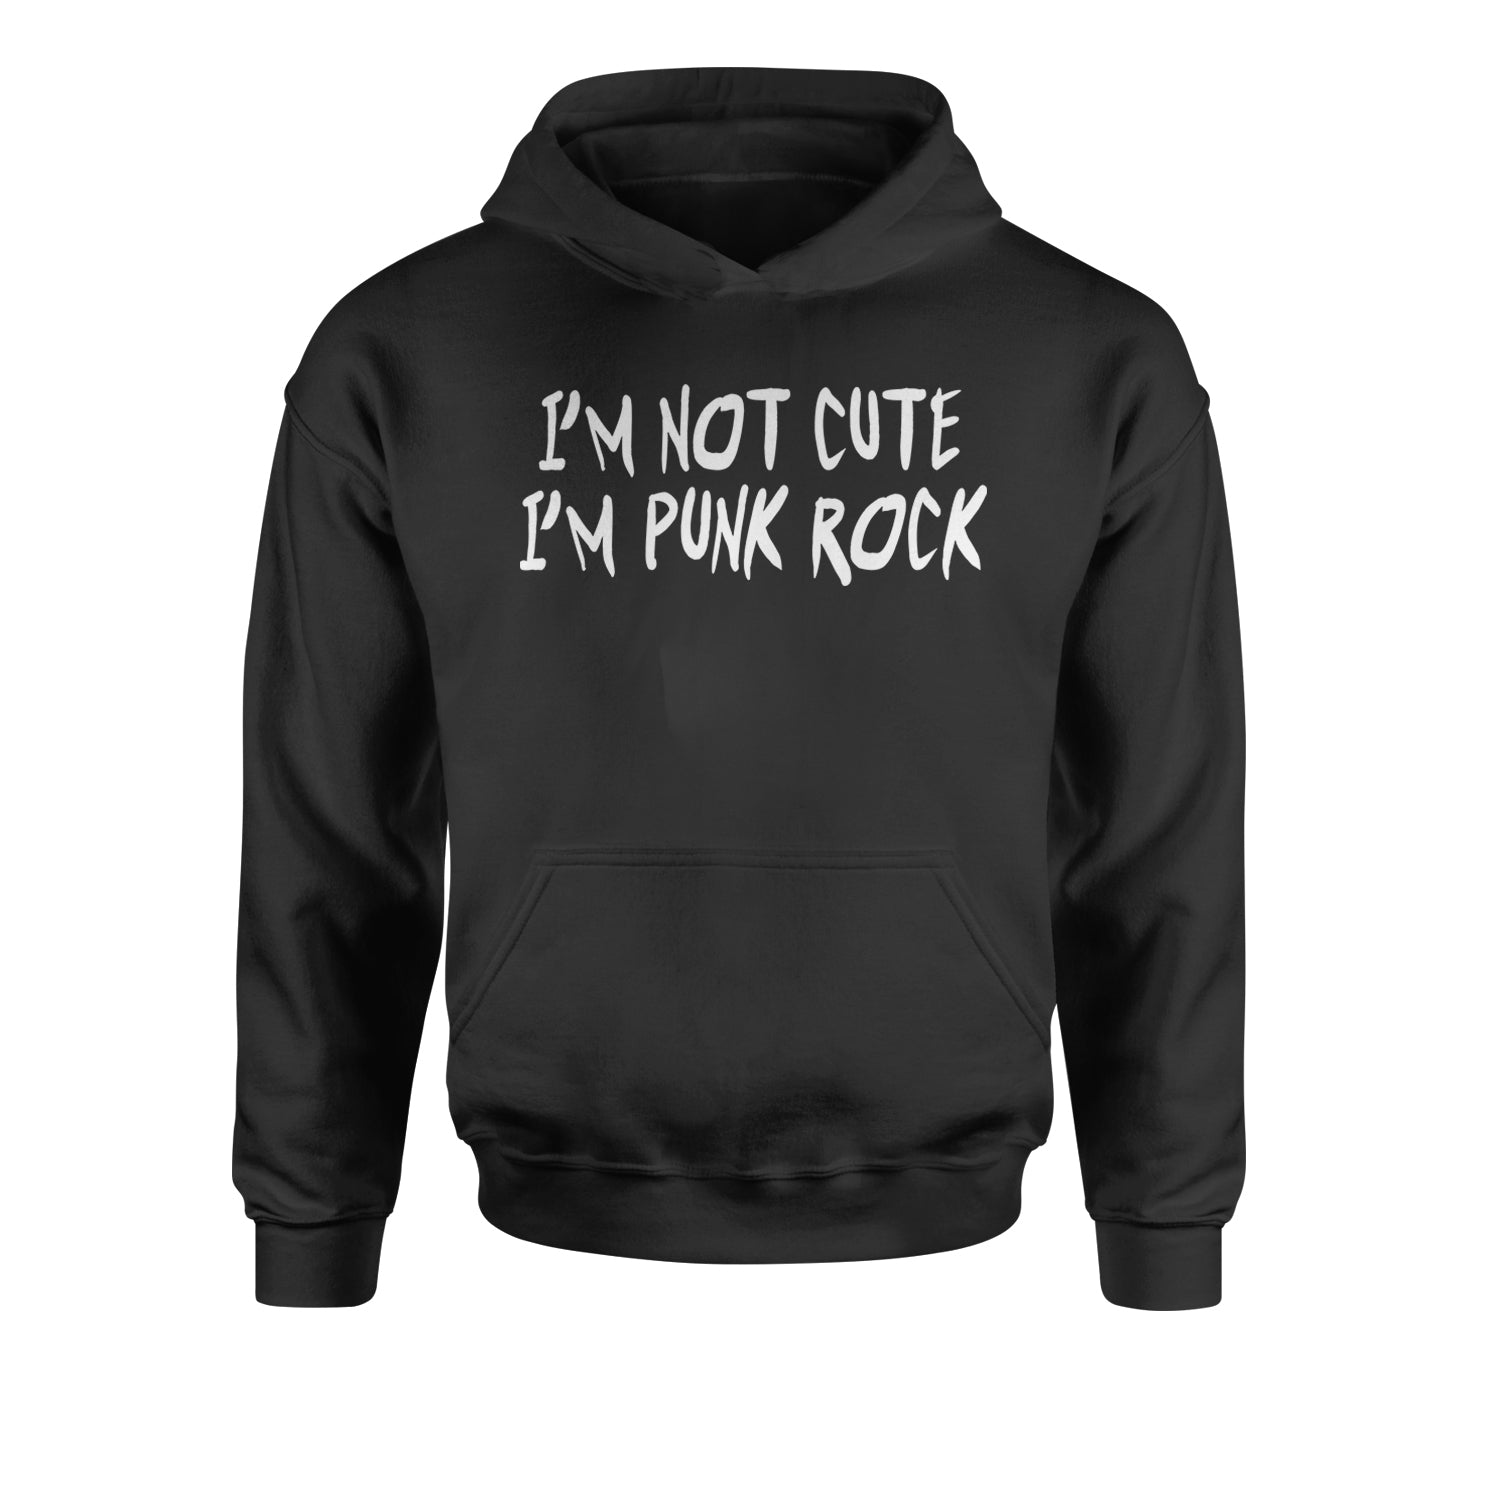 I'm Not Cute, I'm Punk Rock Youth-Sized Hoodie